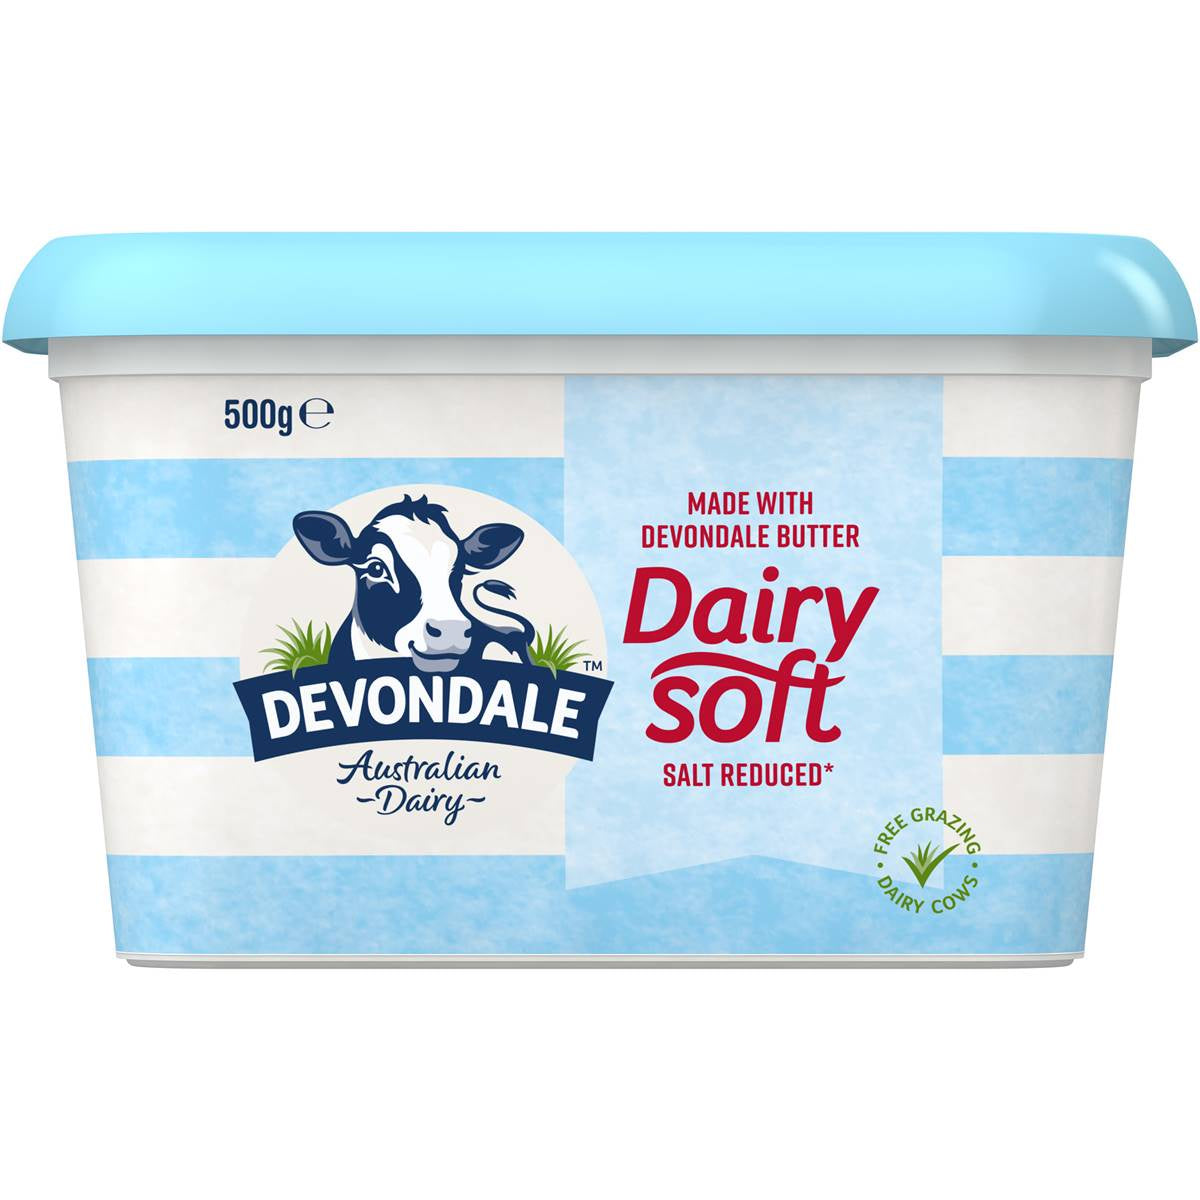 Devondale Dairy Soft 500g